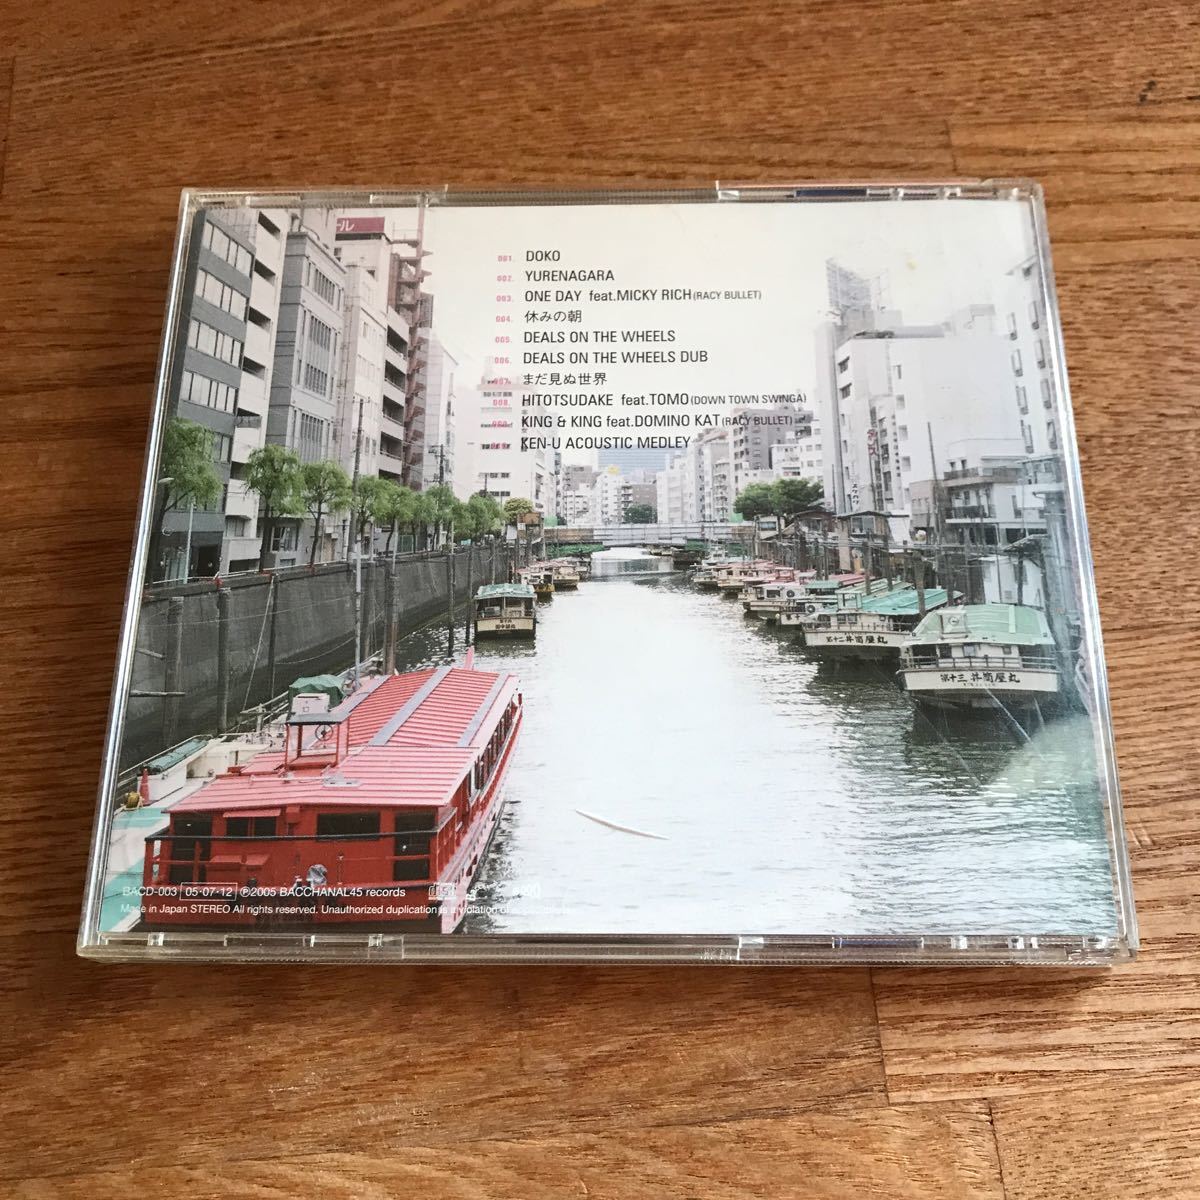  DOKO ＣＤ BACD-3   KEN-U, MICKY RICH, TOMO, DOMINO KAT   BACCHANAL45 records [CD]